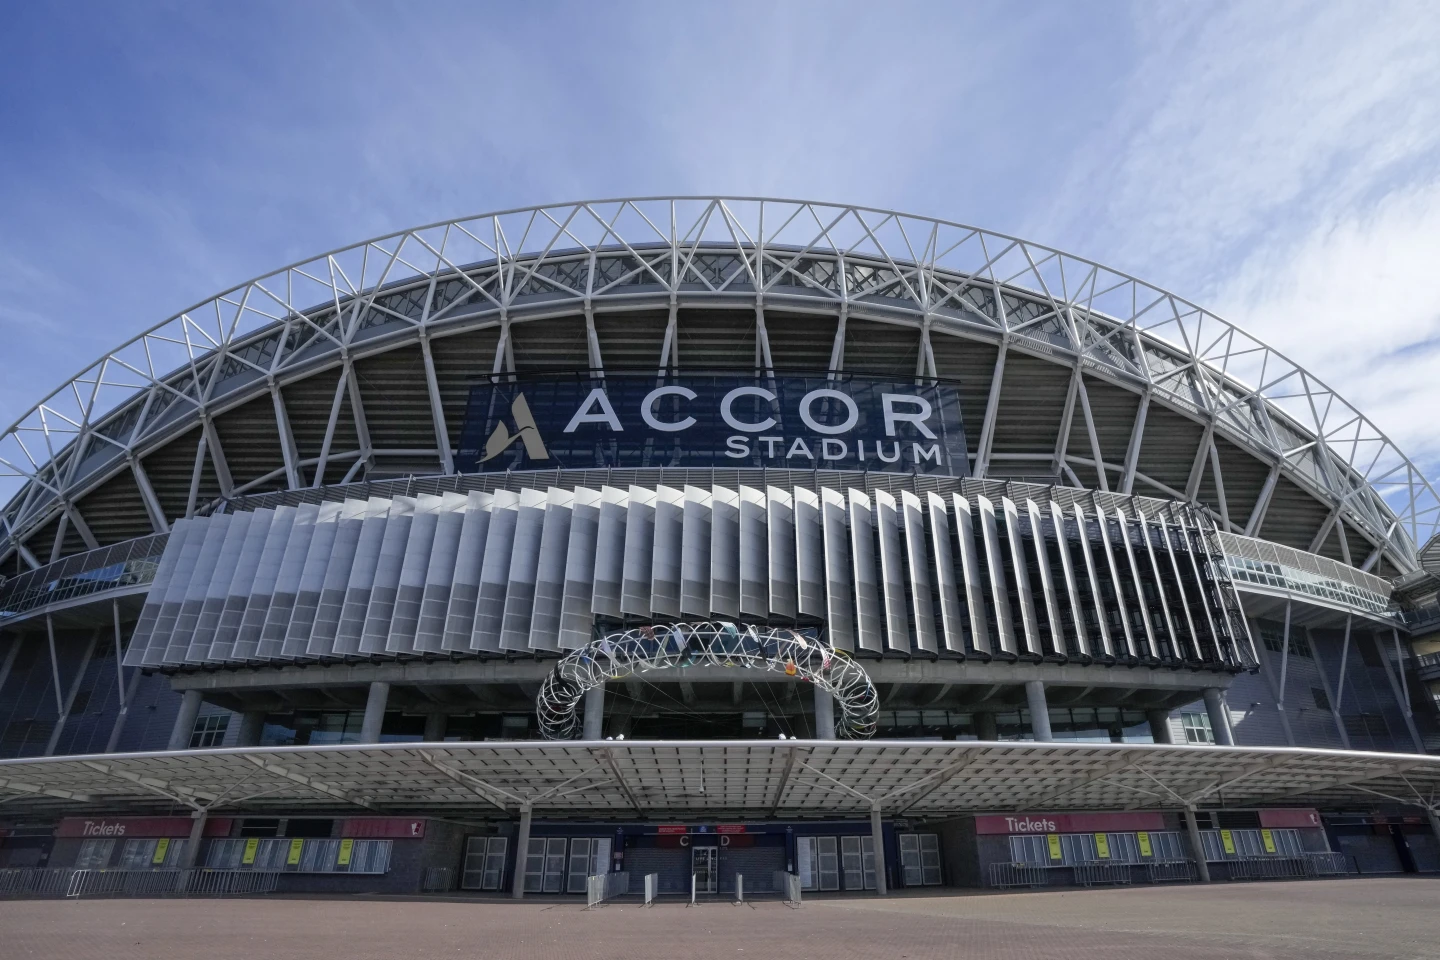 Sydney's iconic Stadium Australia